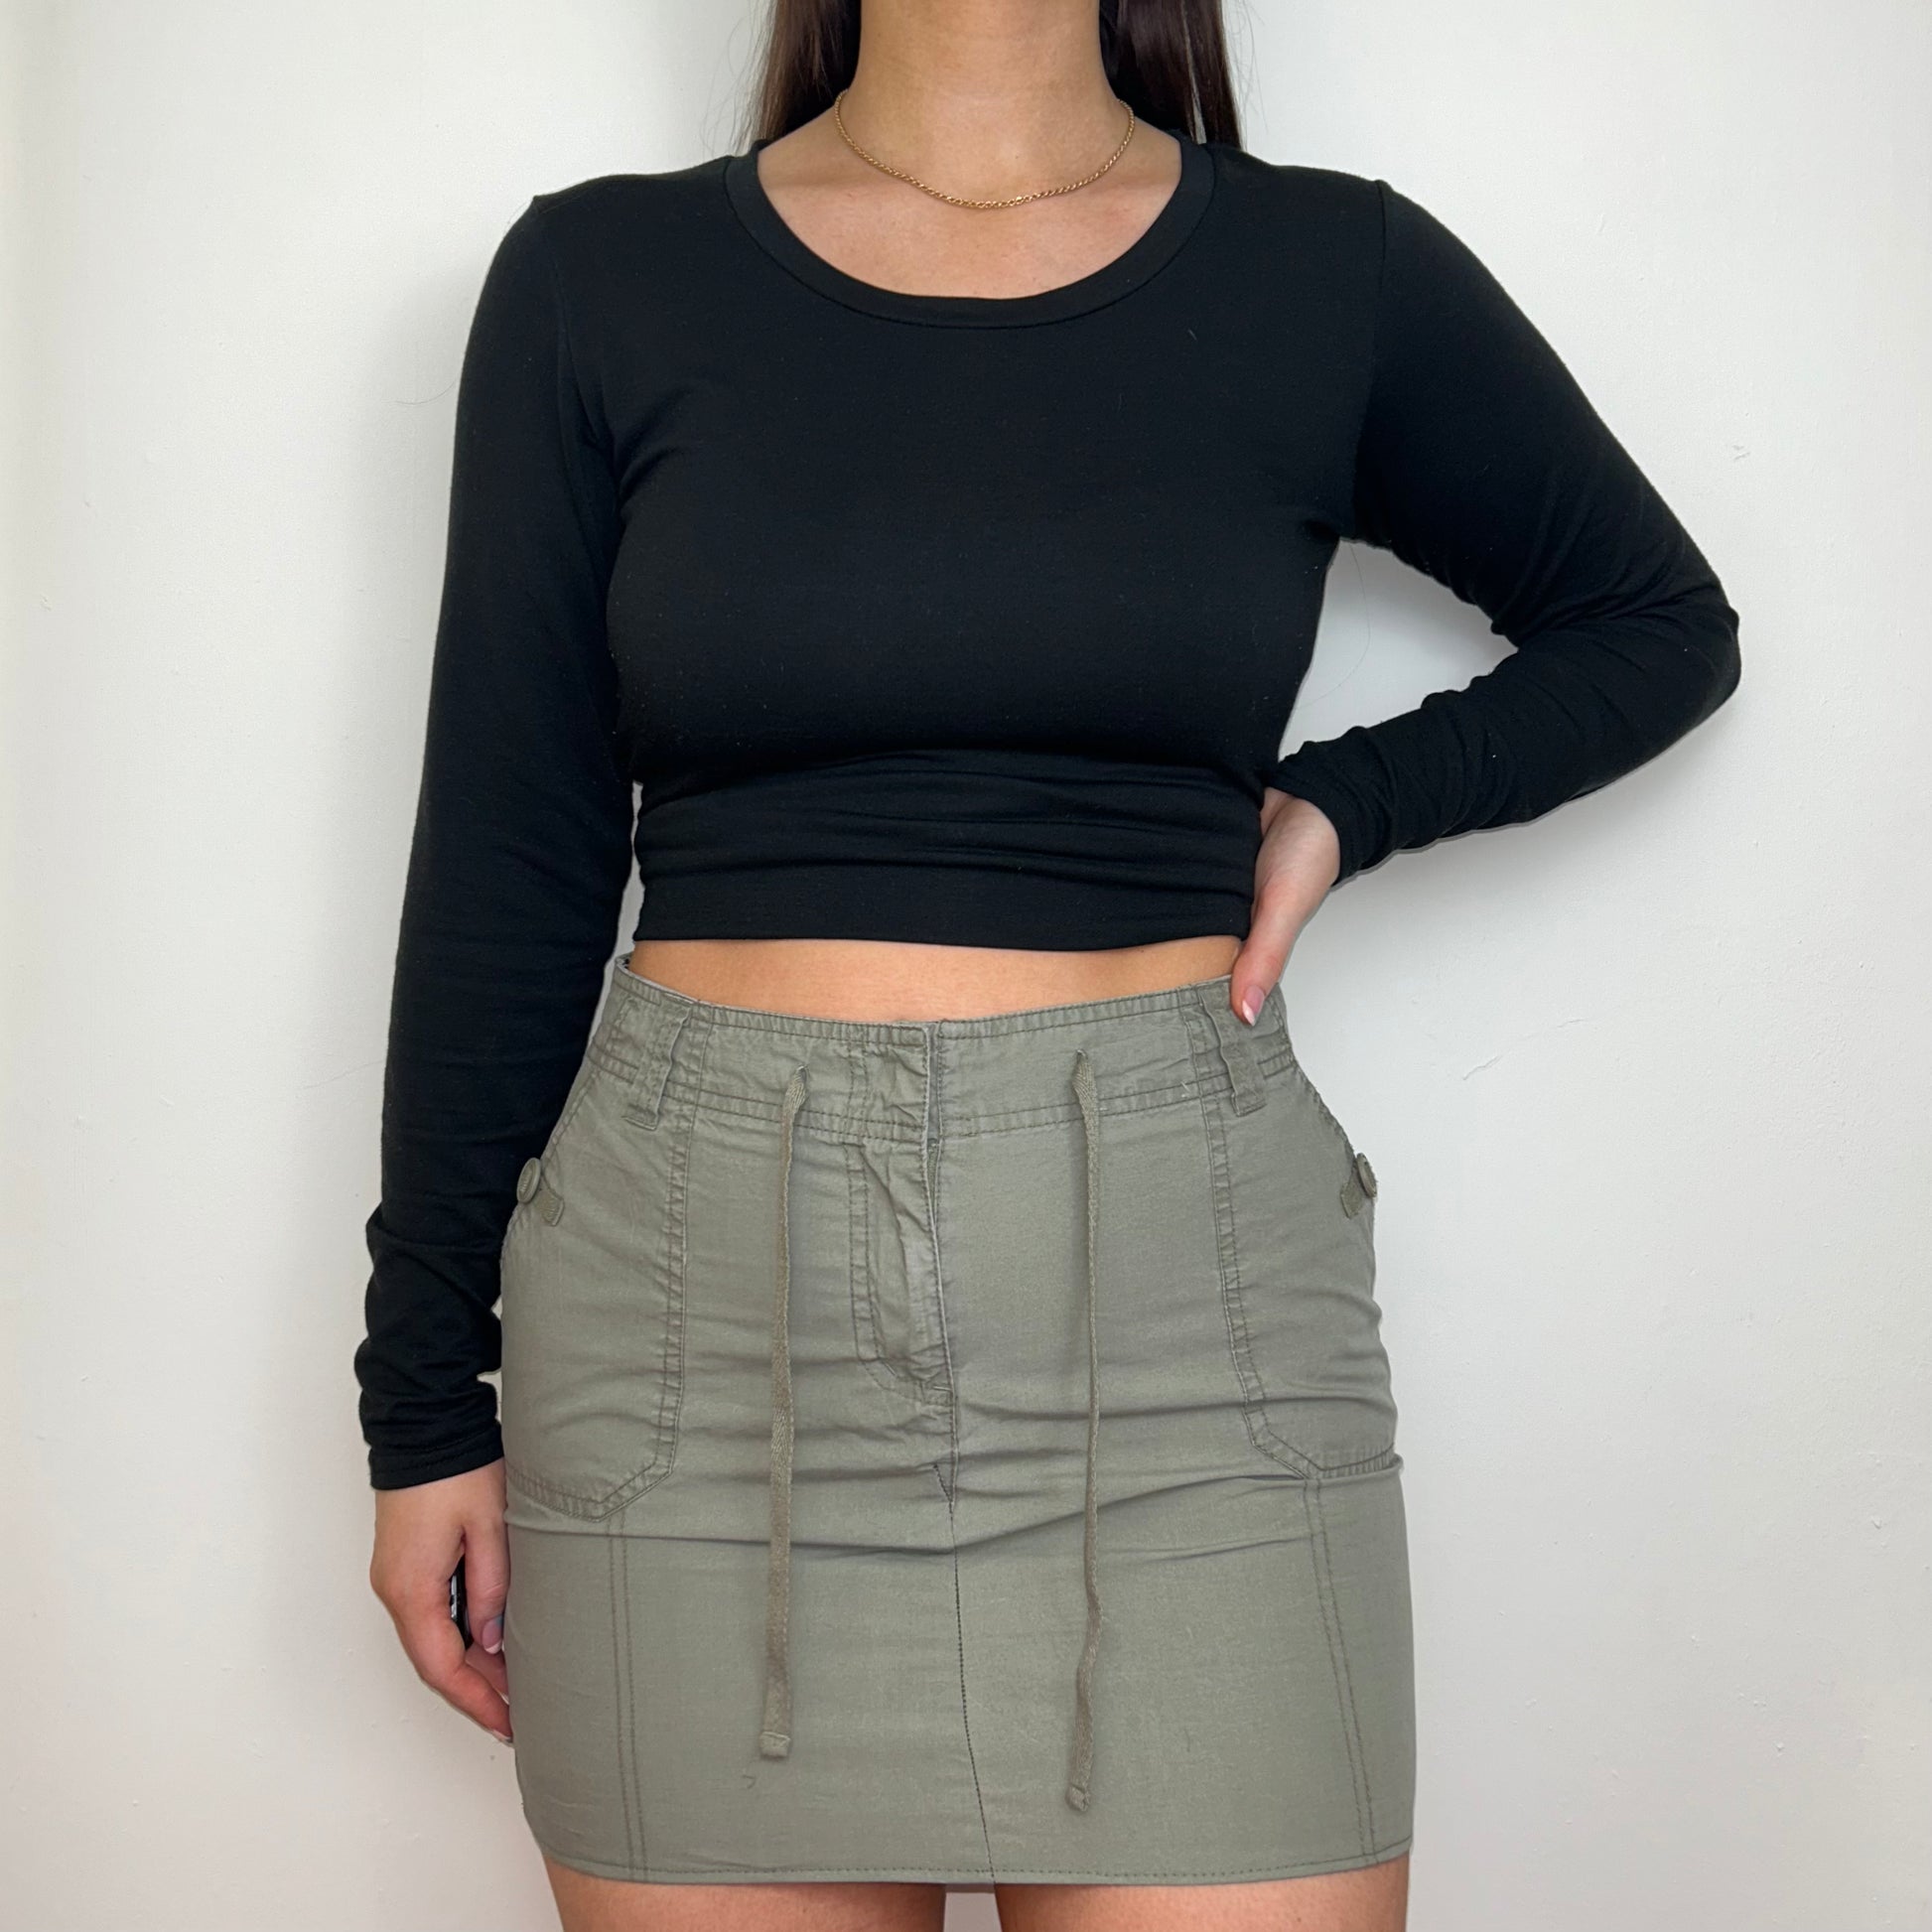 khaki grey mini cargo skirt shown on a model wearing a black long sleeve top